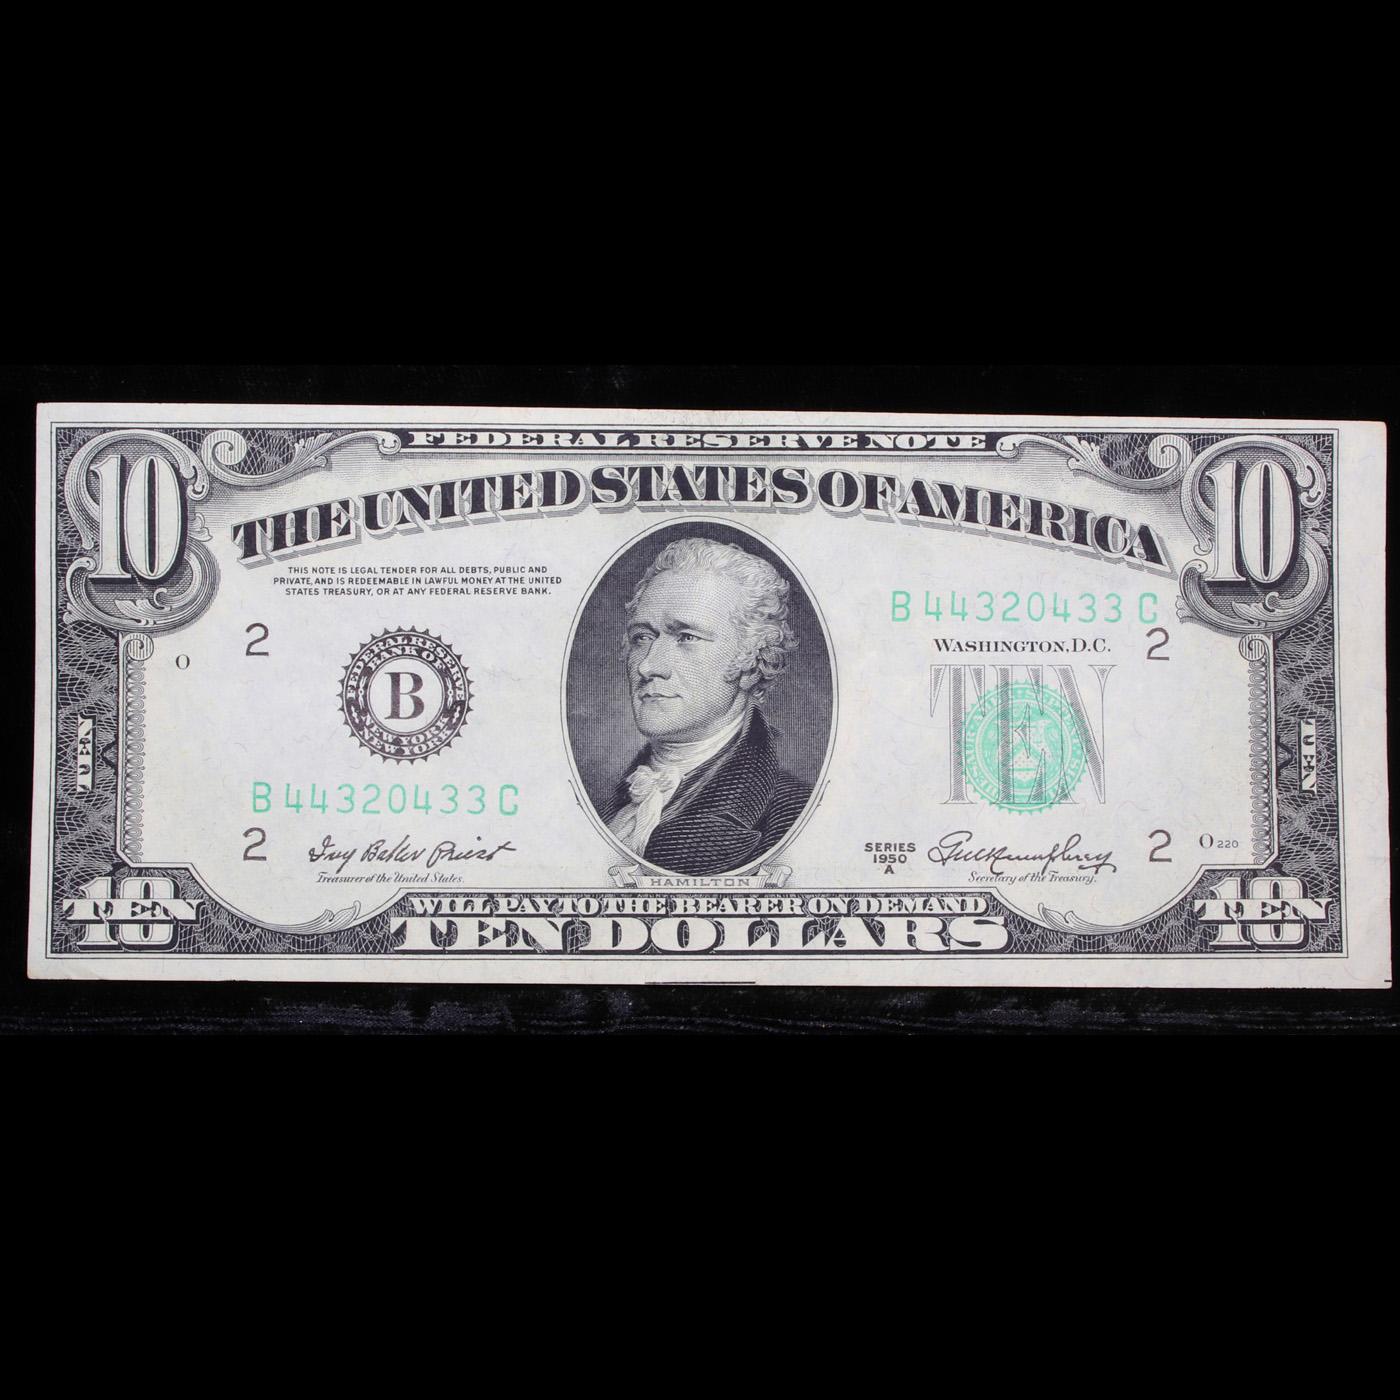 1950a $10 Green Seal Federal Reserve Note (New York, NY) Grades Gem CU